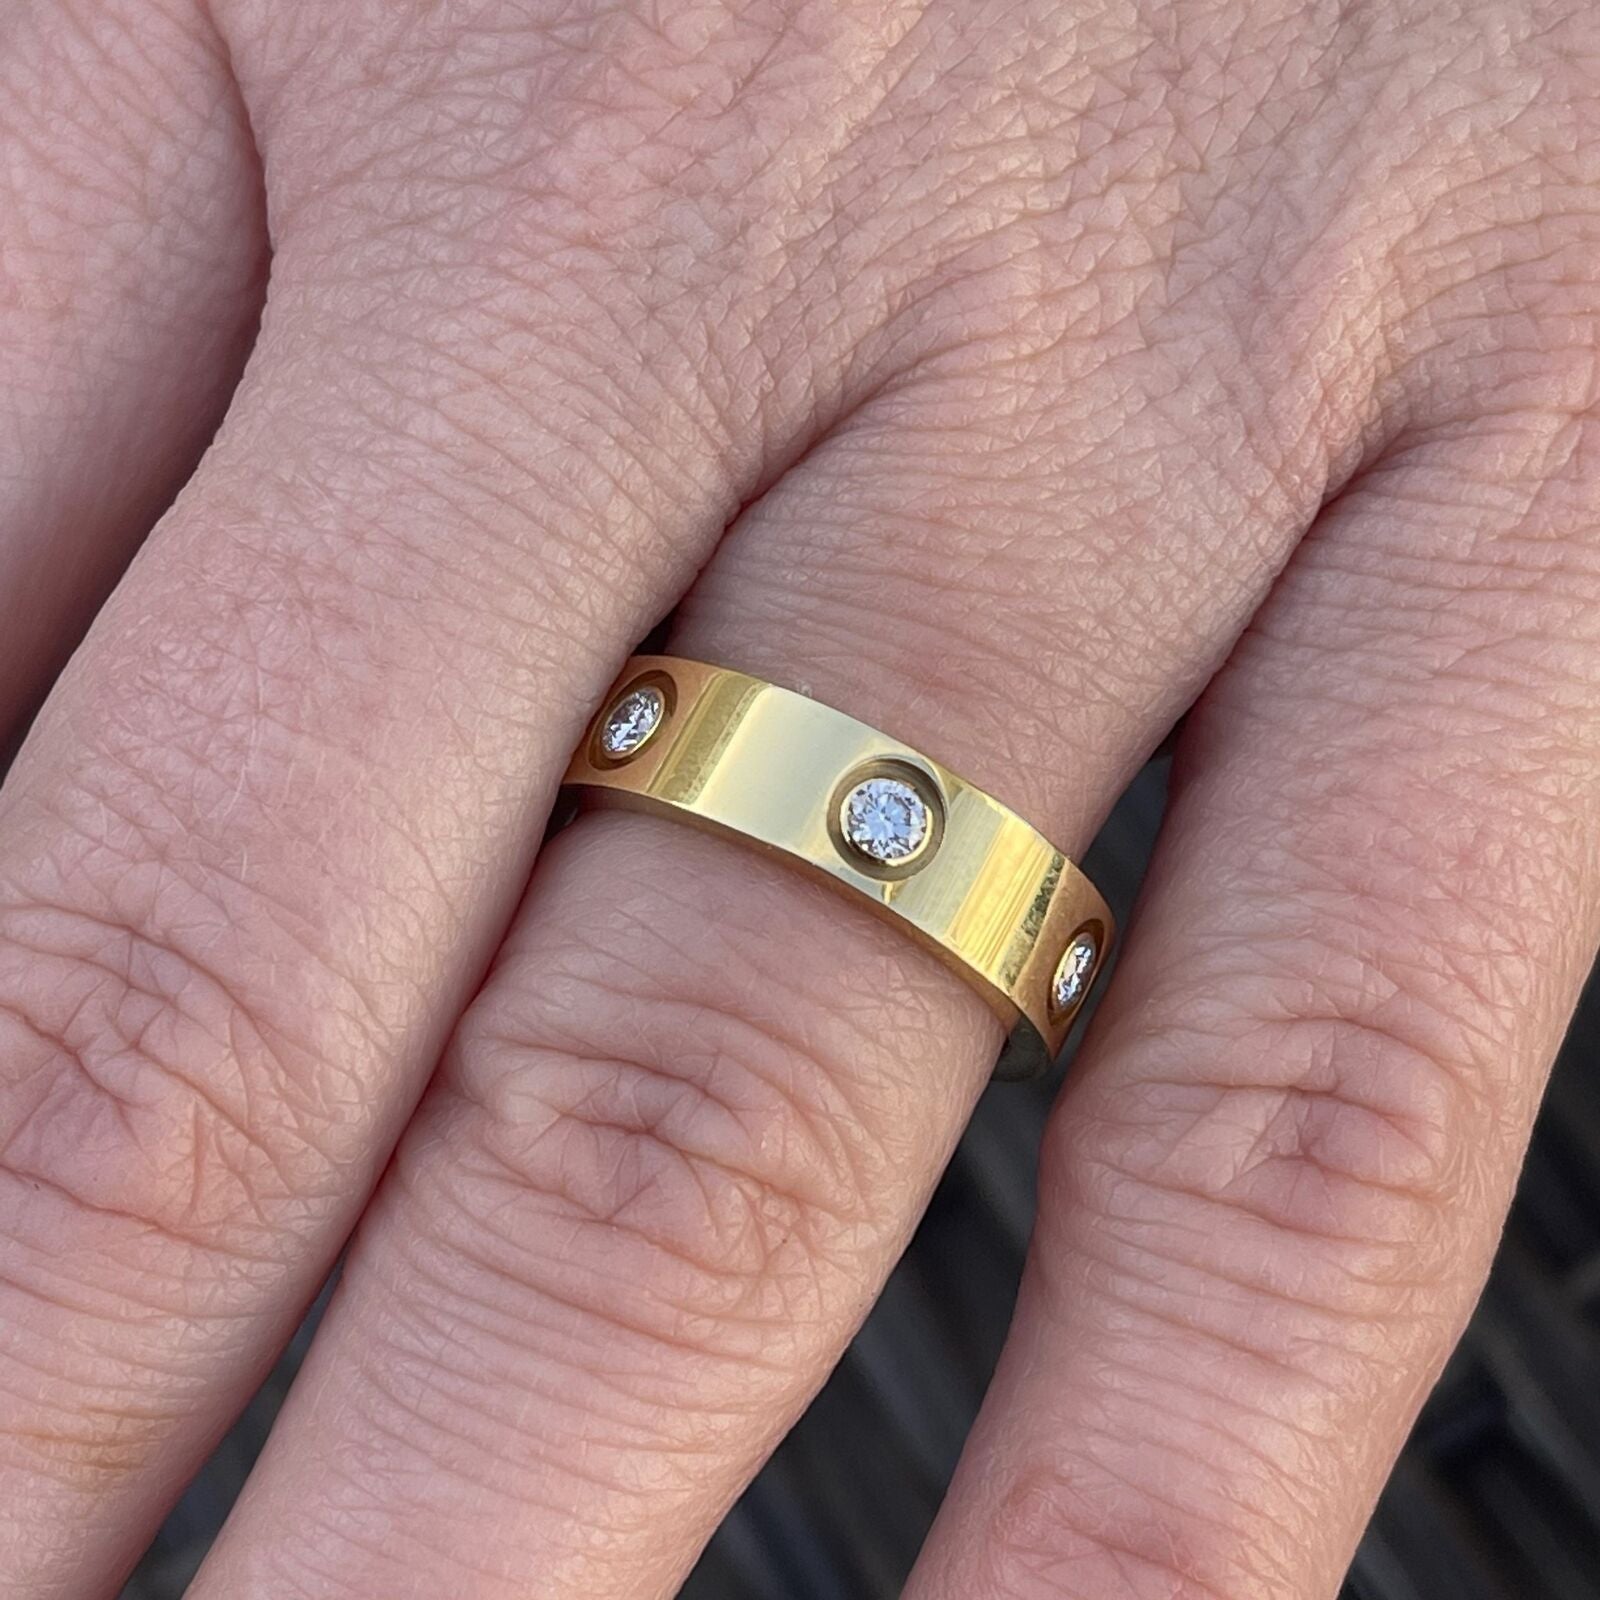 Couple Ring | Couple ring design, Band ring designs, Couple band